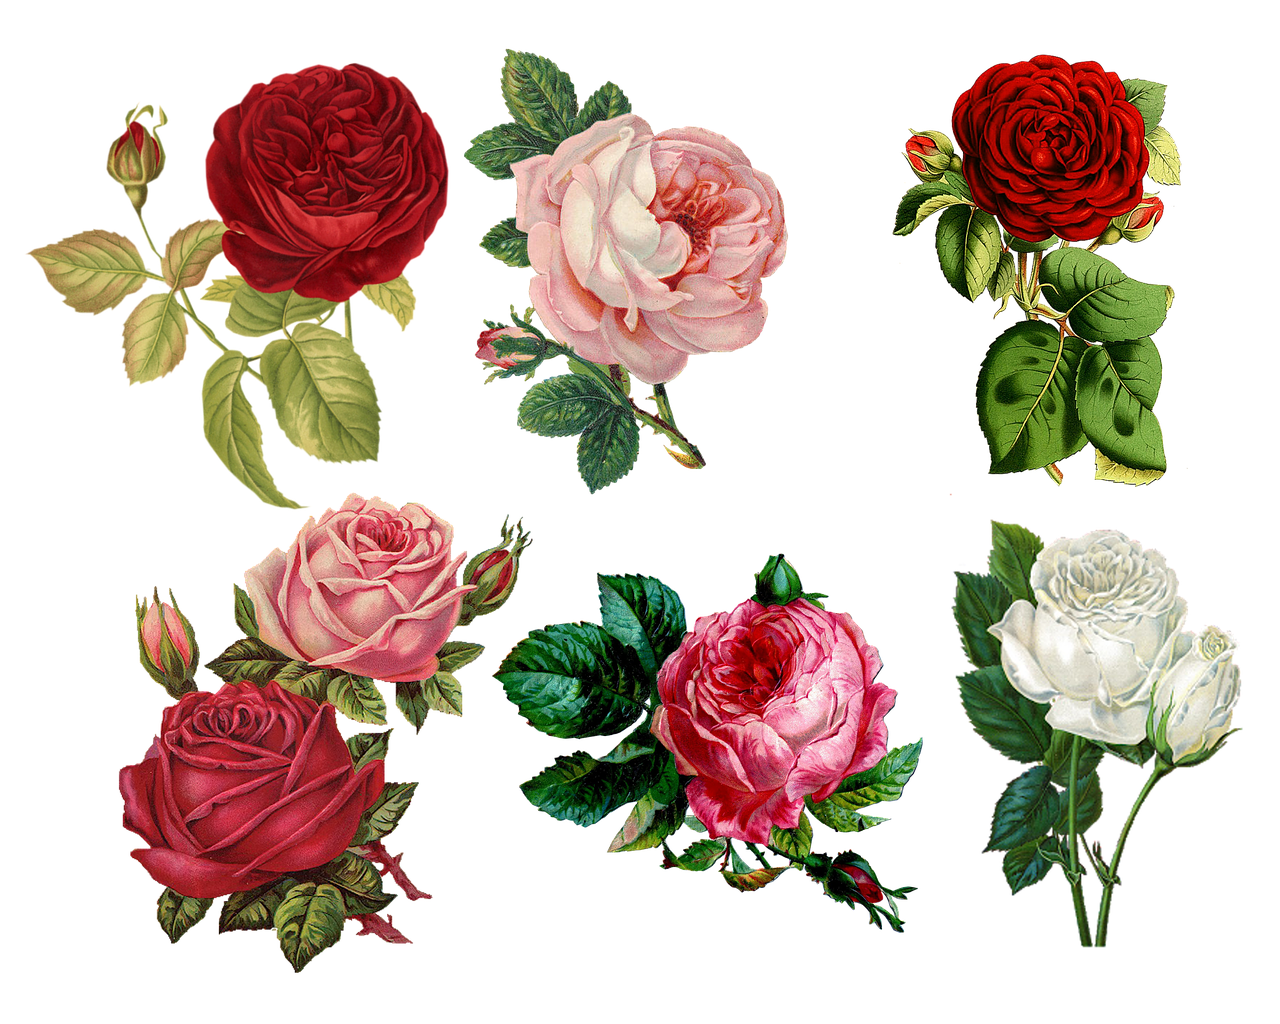 roses collage sheet free photo